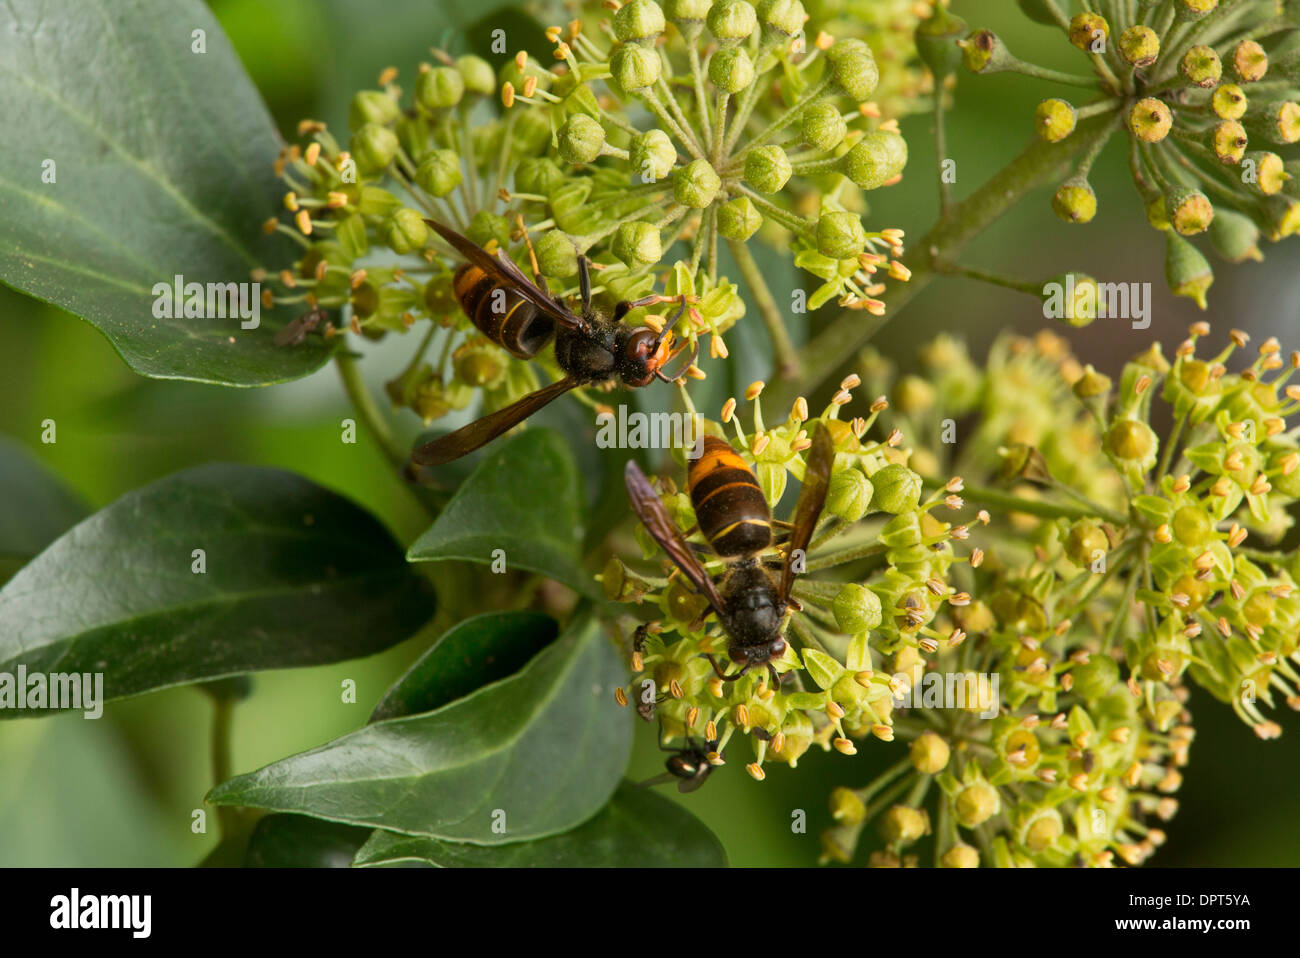 Asian predatory wasp / Asian Hornet, Vespa velutina on ivy flowers in autumn. Stock Photo